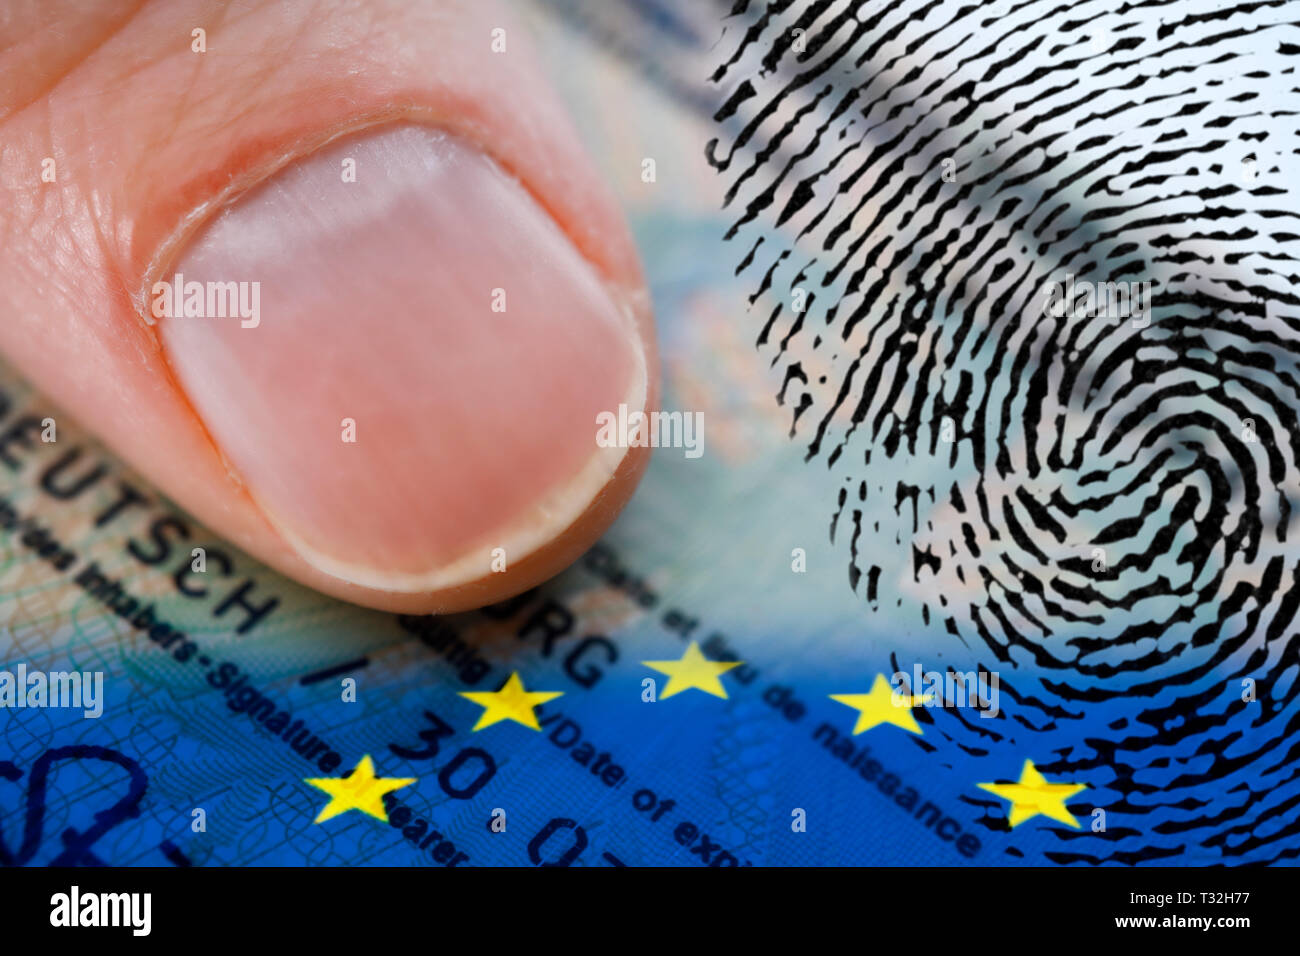 PHOTOMONTAGE, thumb on German identity card with EU flag and fingerprint, FOTOMONTAGE, Daumen auf deutschem Personalausweis mit EU-Fahne und Fingerabd Stock Photo